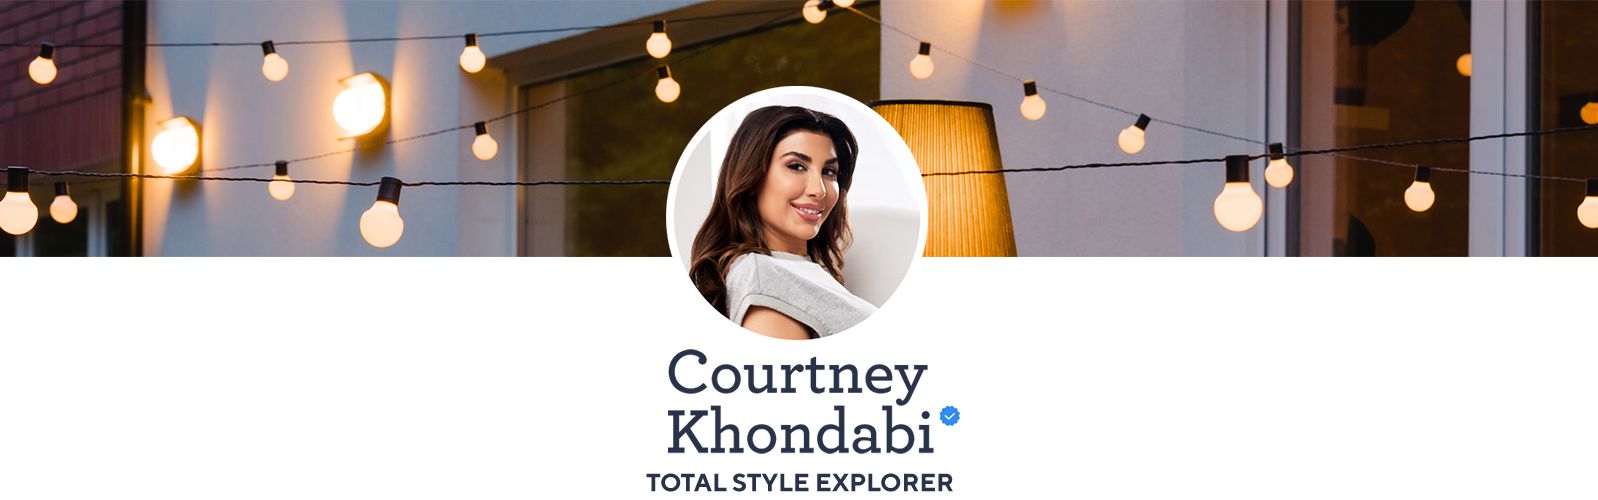 Courtney Khondabi - Total Style Explorer